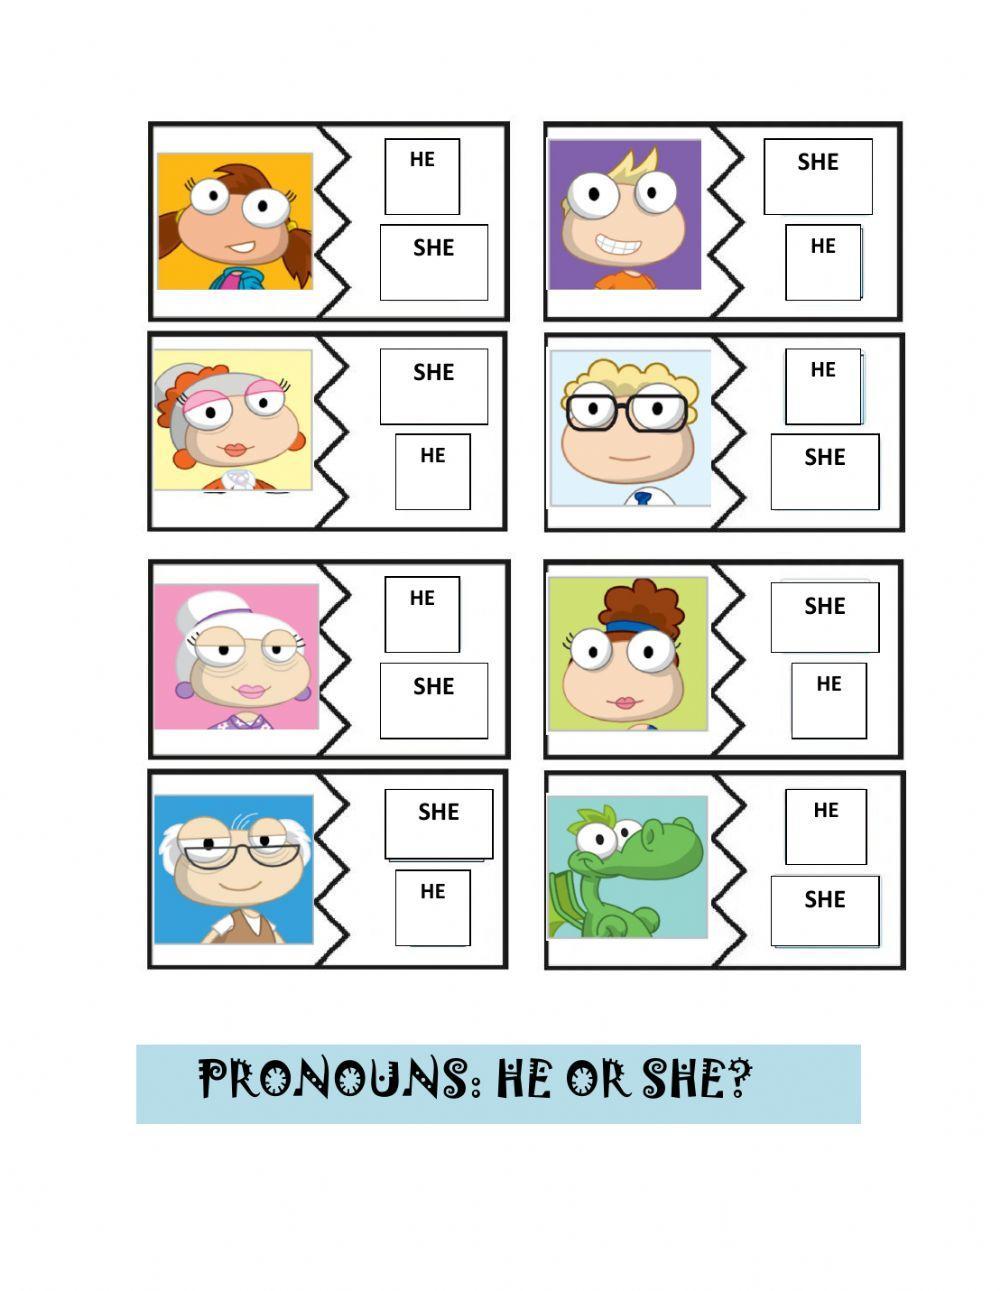 Pronouns: he or she?